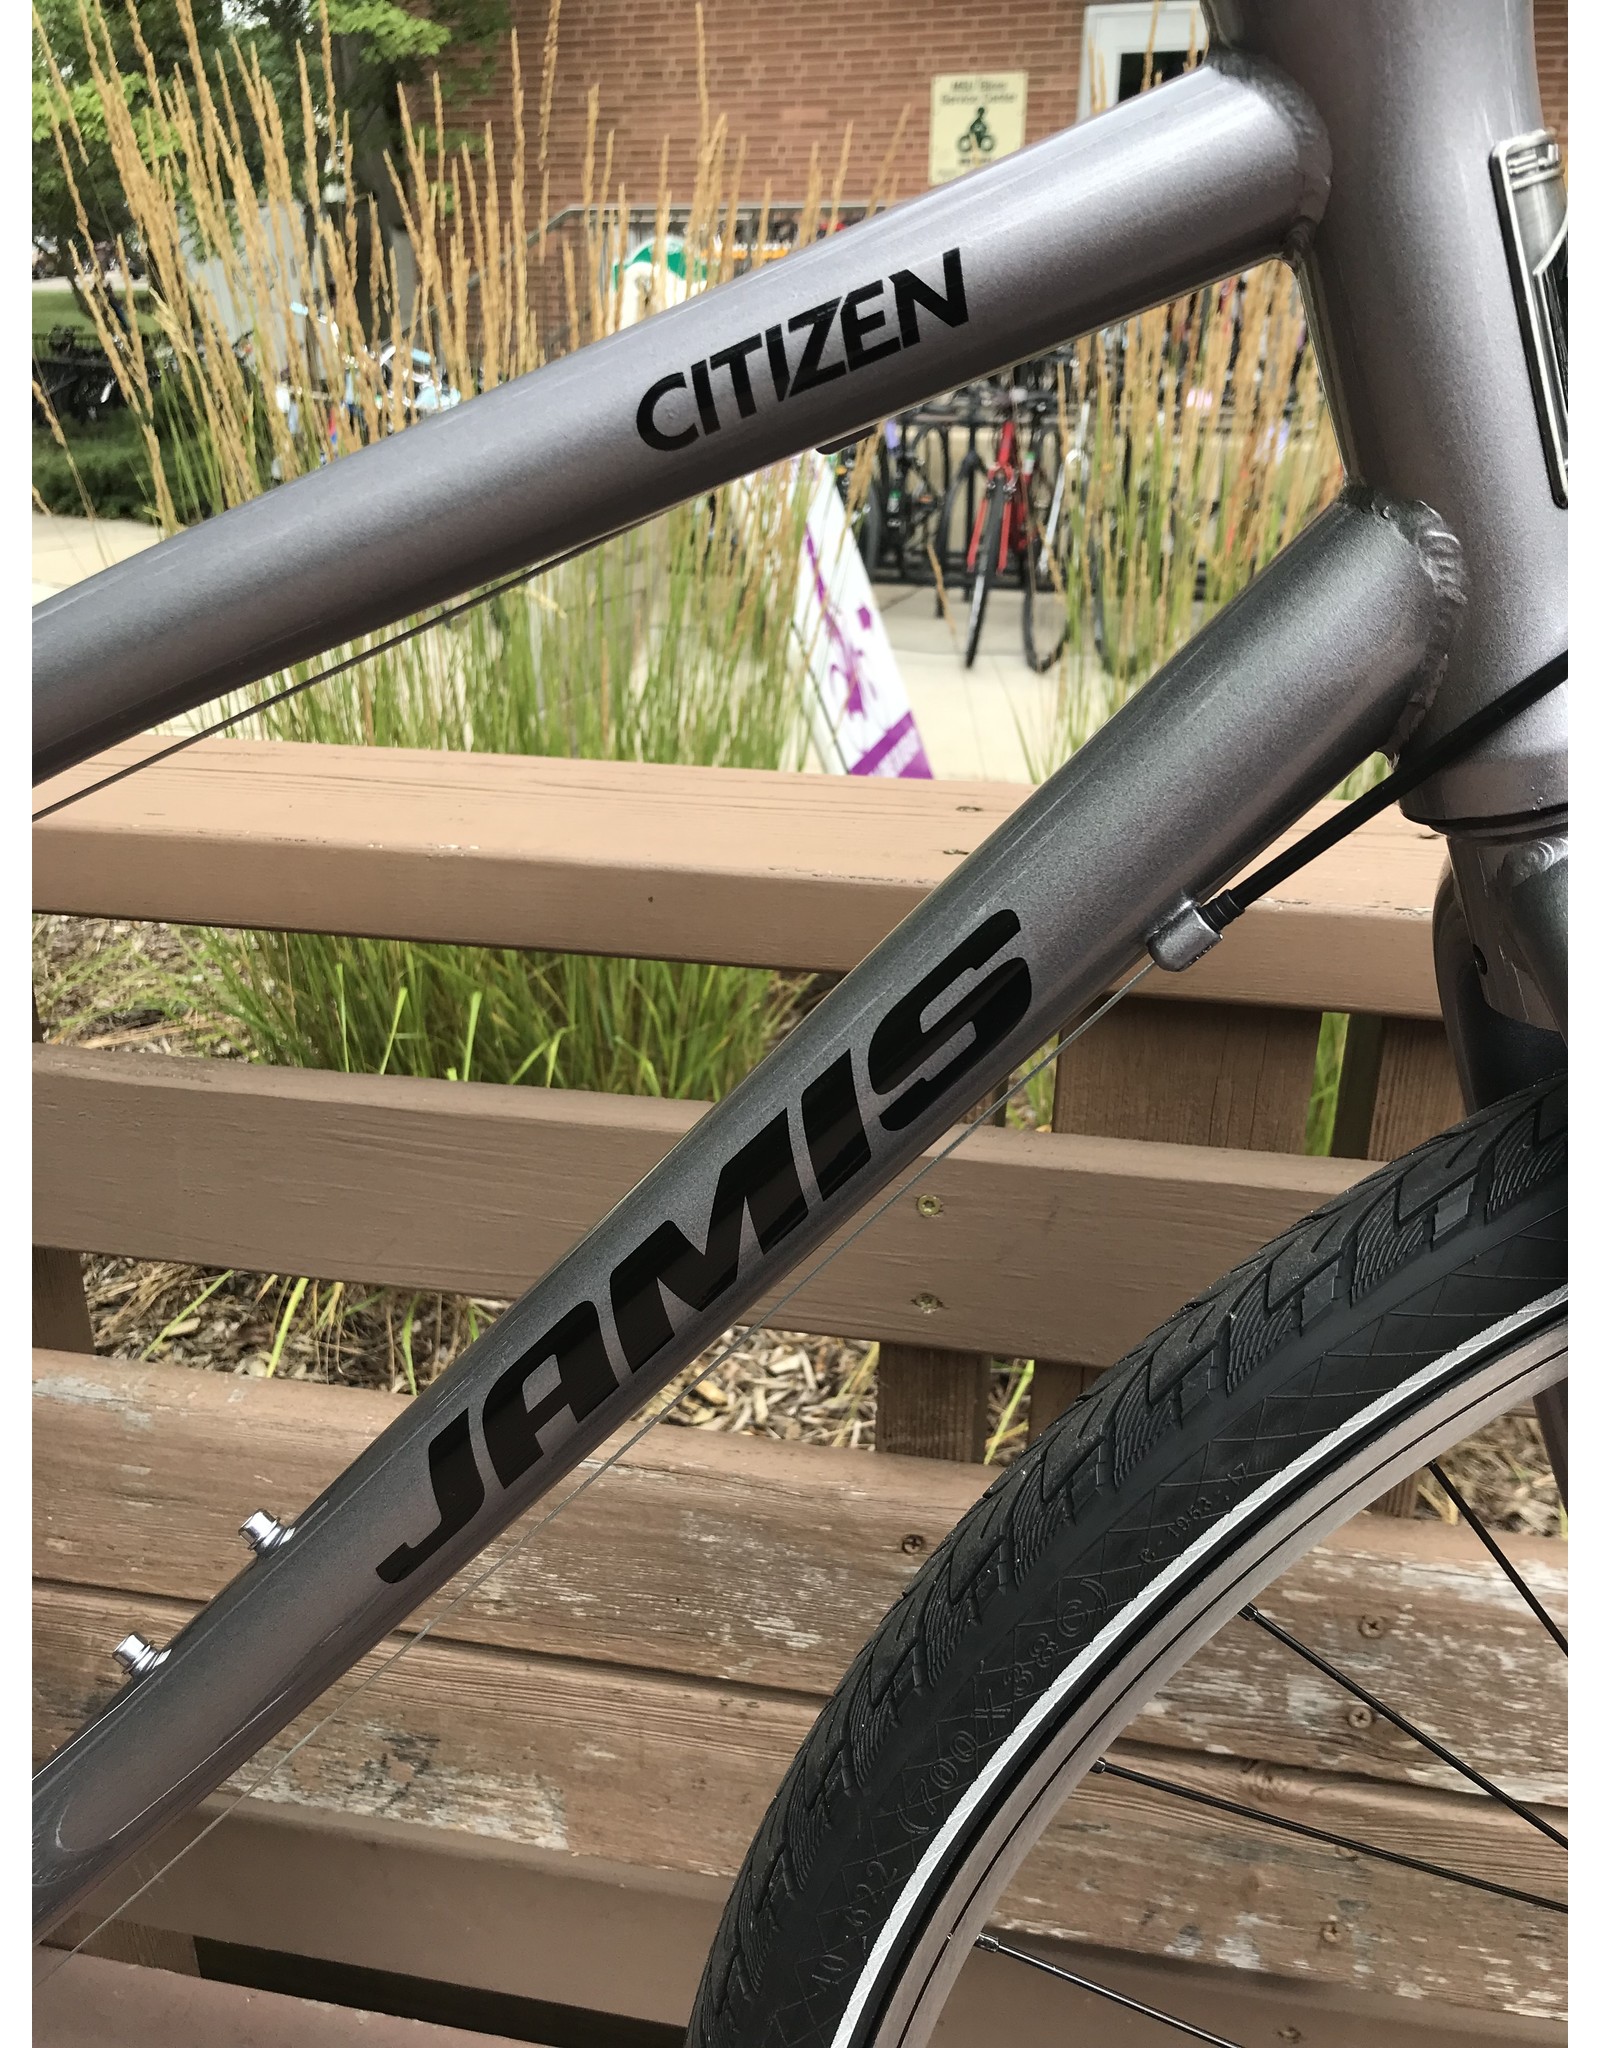 Jamis Jamis, Citizen hybrid-city bike